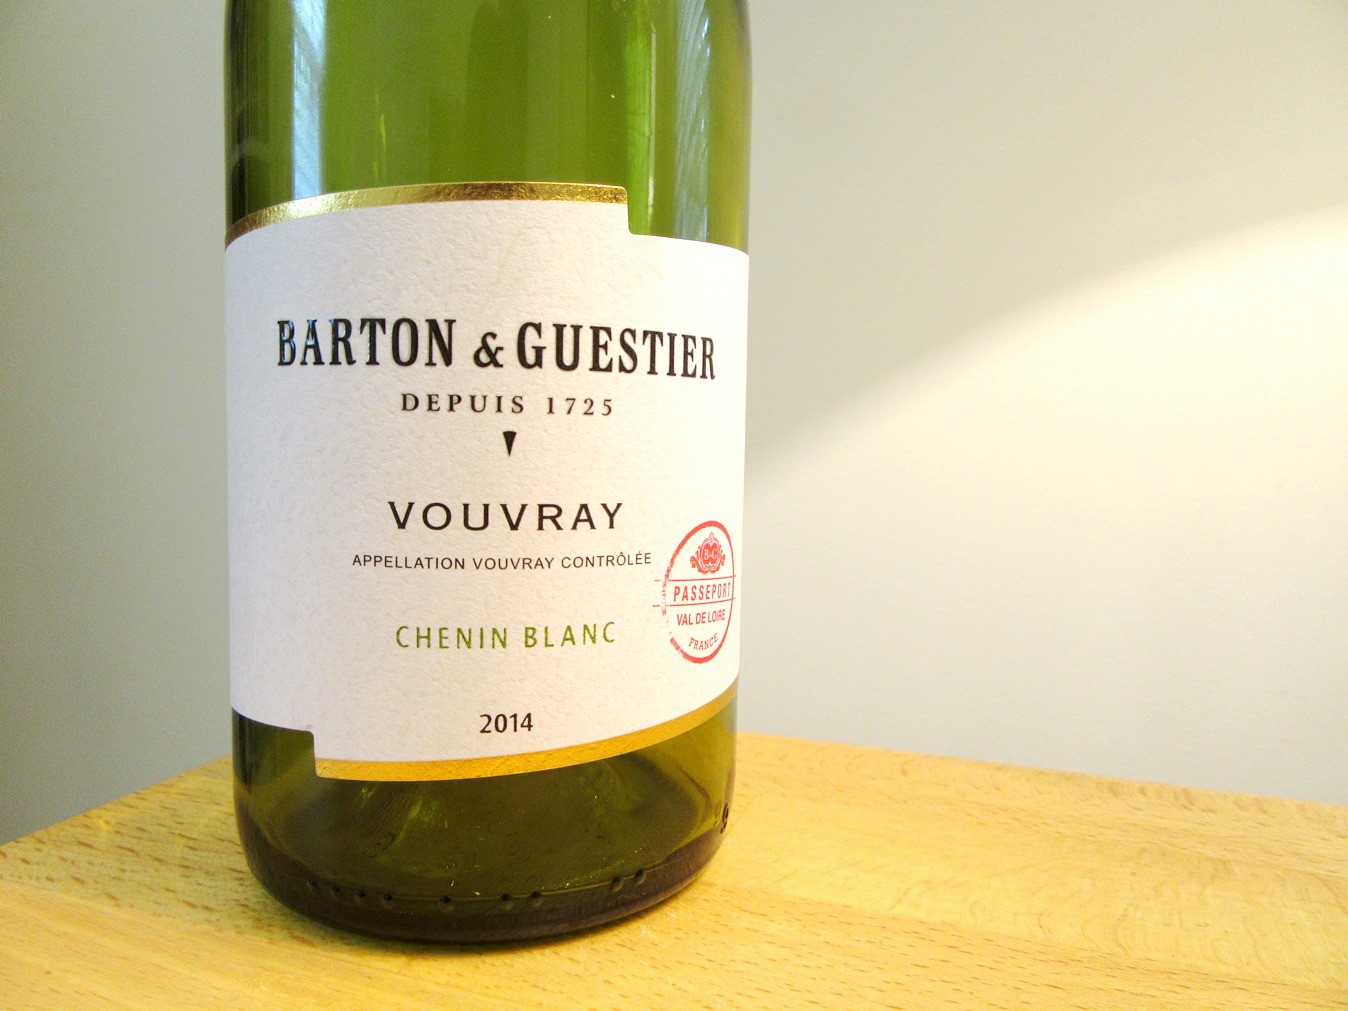 Barton & Guestier, Vouvray 2014, Chenin Blanc, Loire Valley, France, Wine Casual